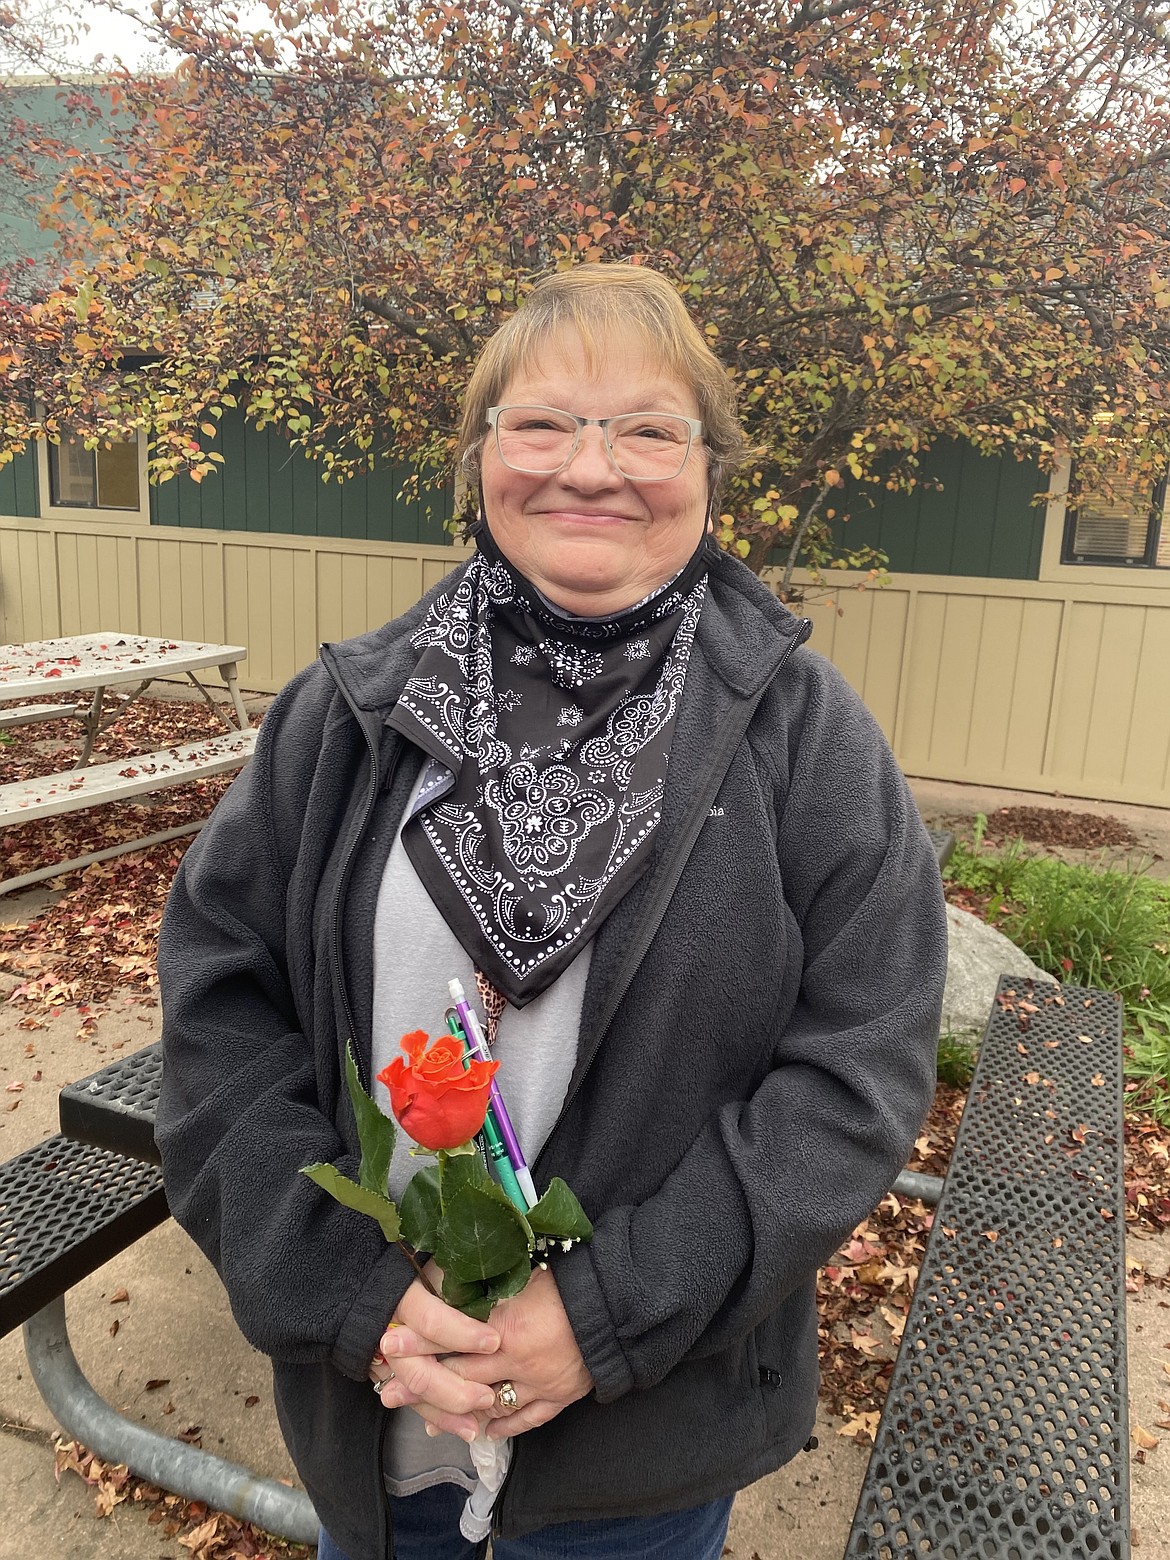 TESH client Gloria Paschal received a rose from her teacher Sandy.